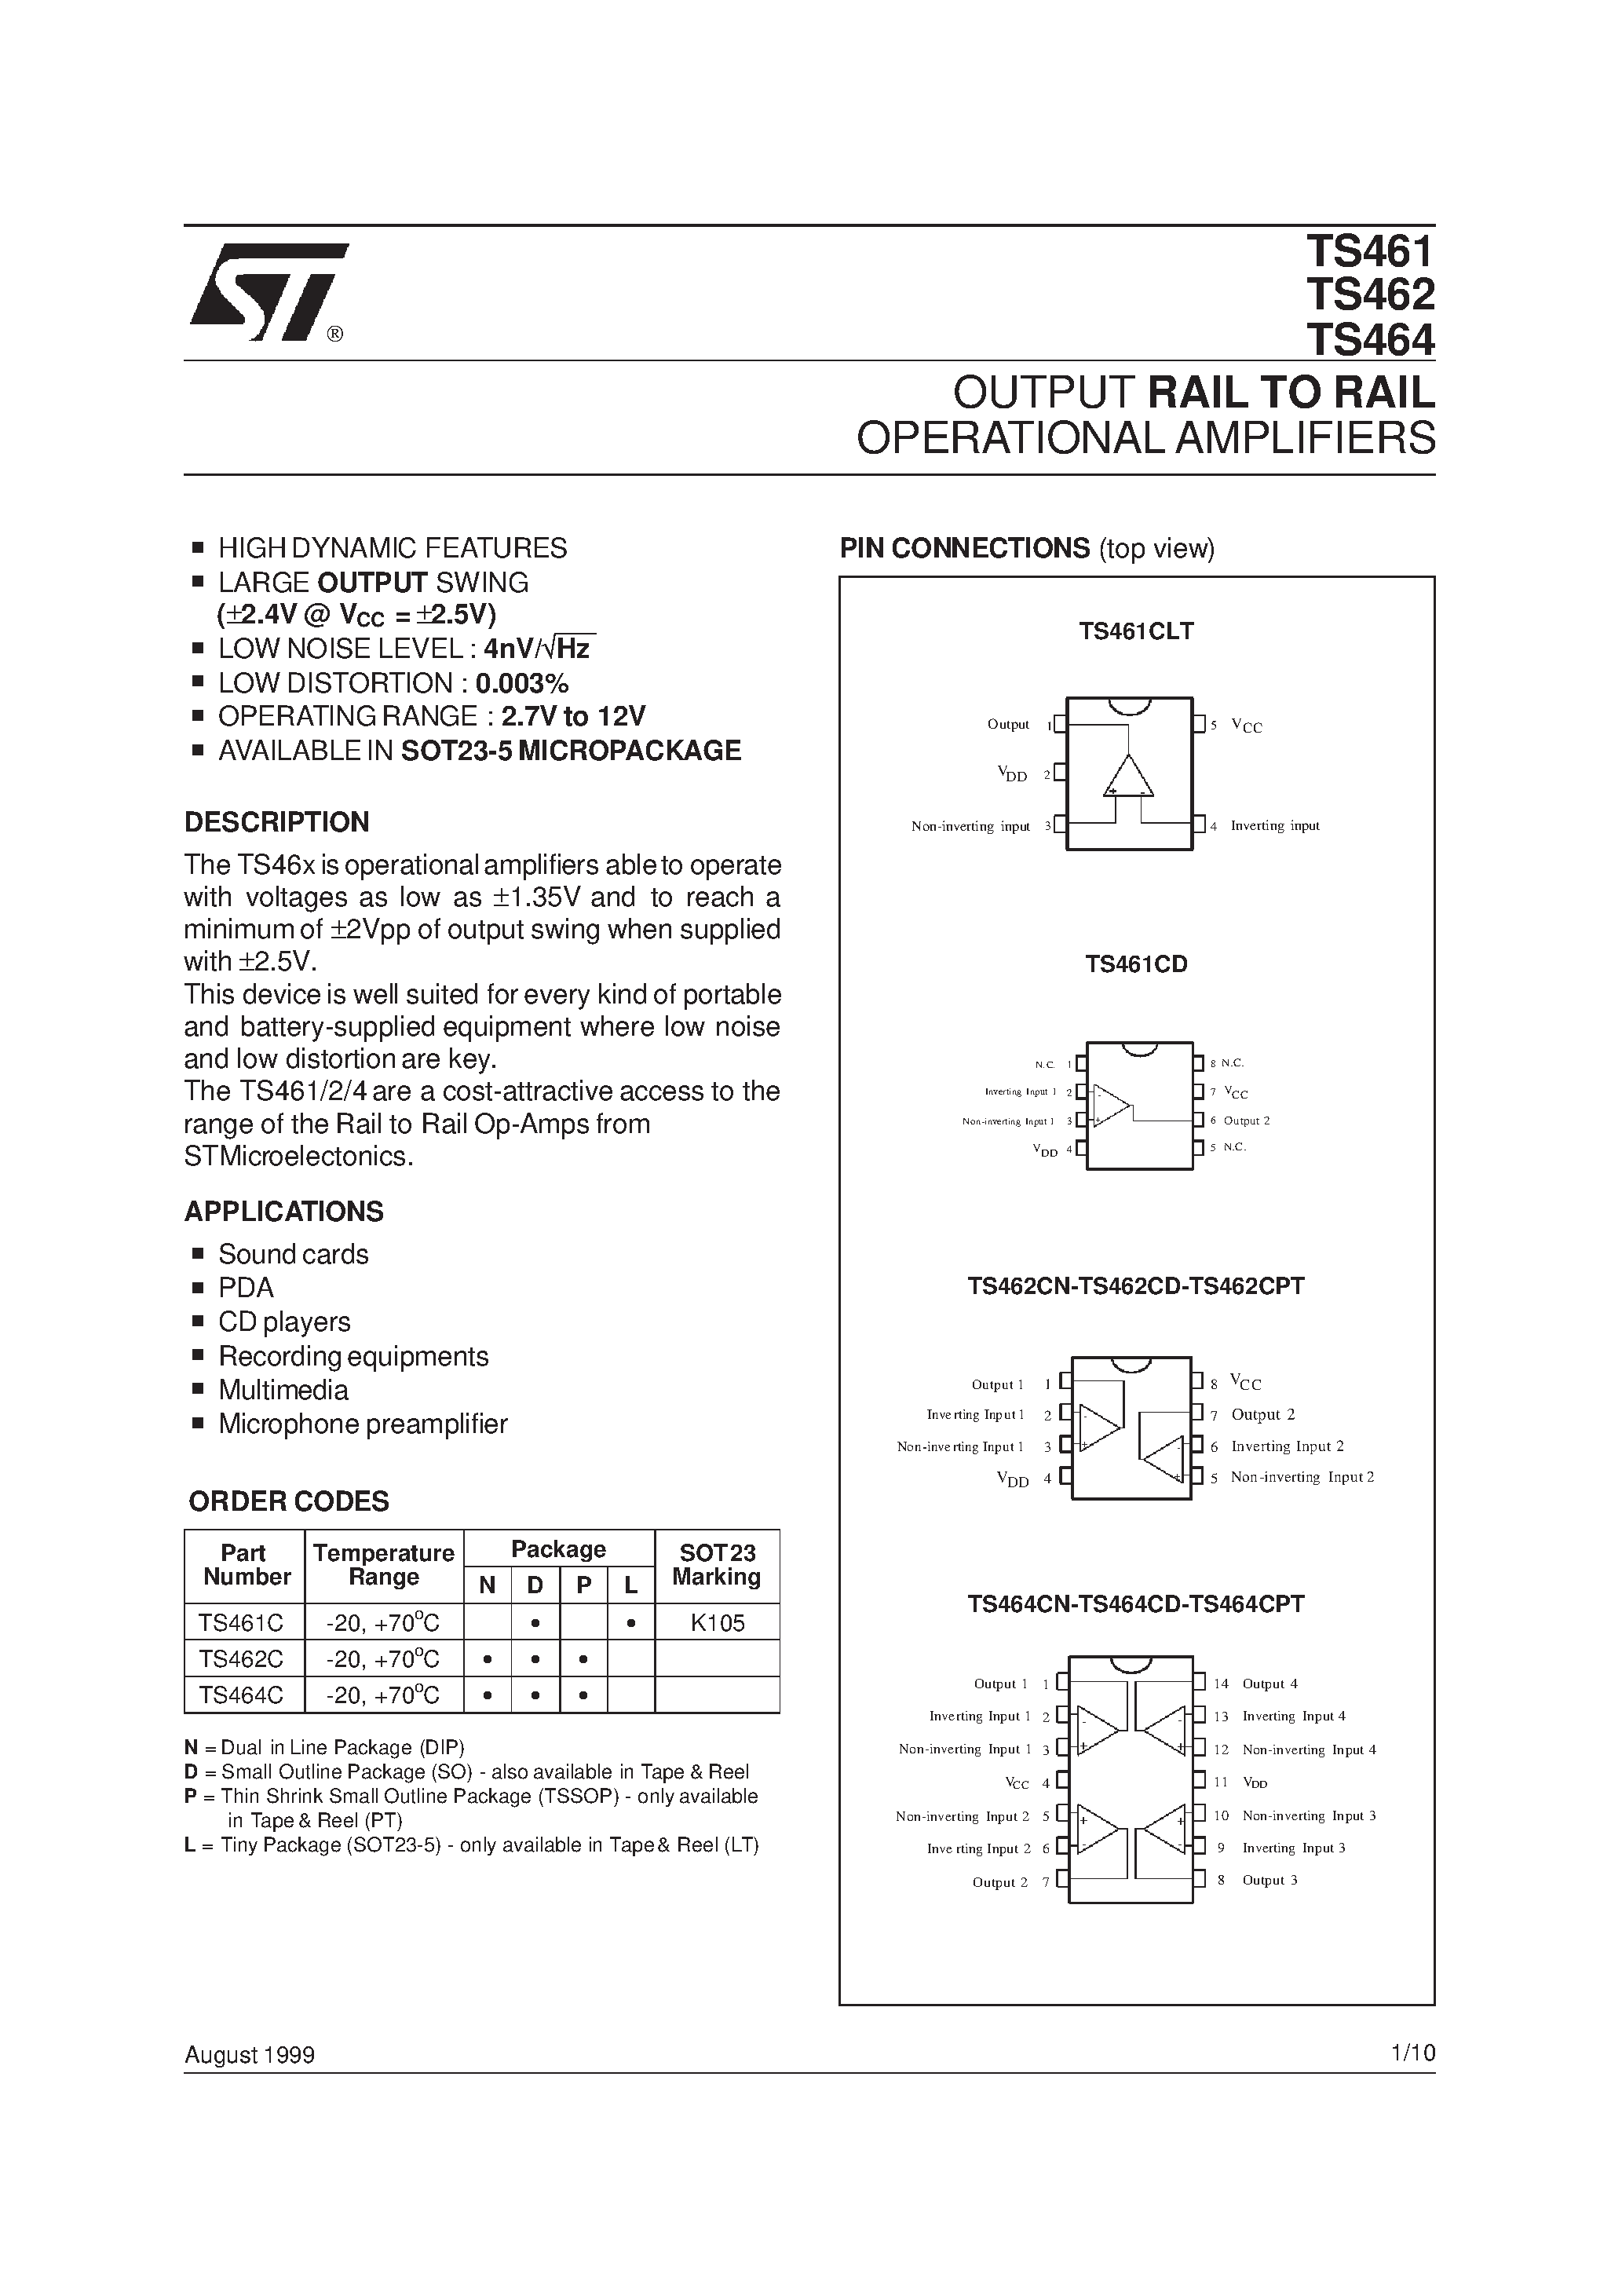 Datasheet TS462C - OUTPUT RAIL TO RAIL OPERATIONAL AMPLIFIERS page 1